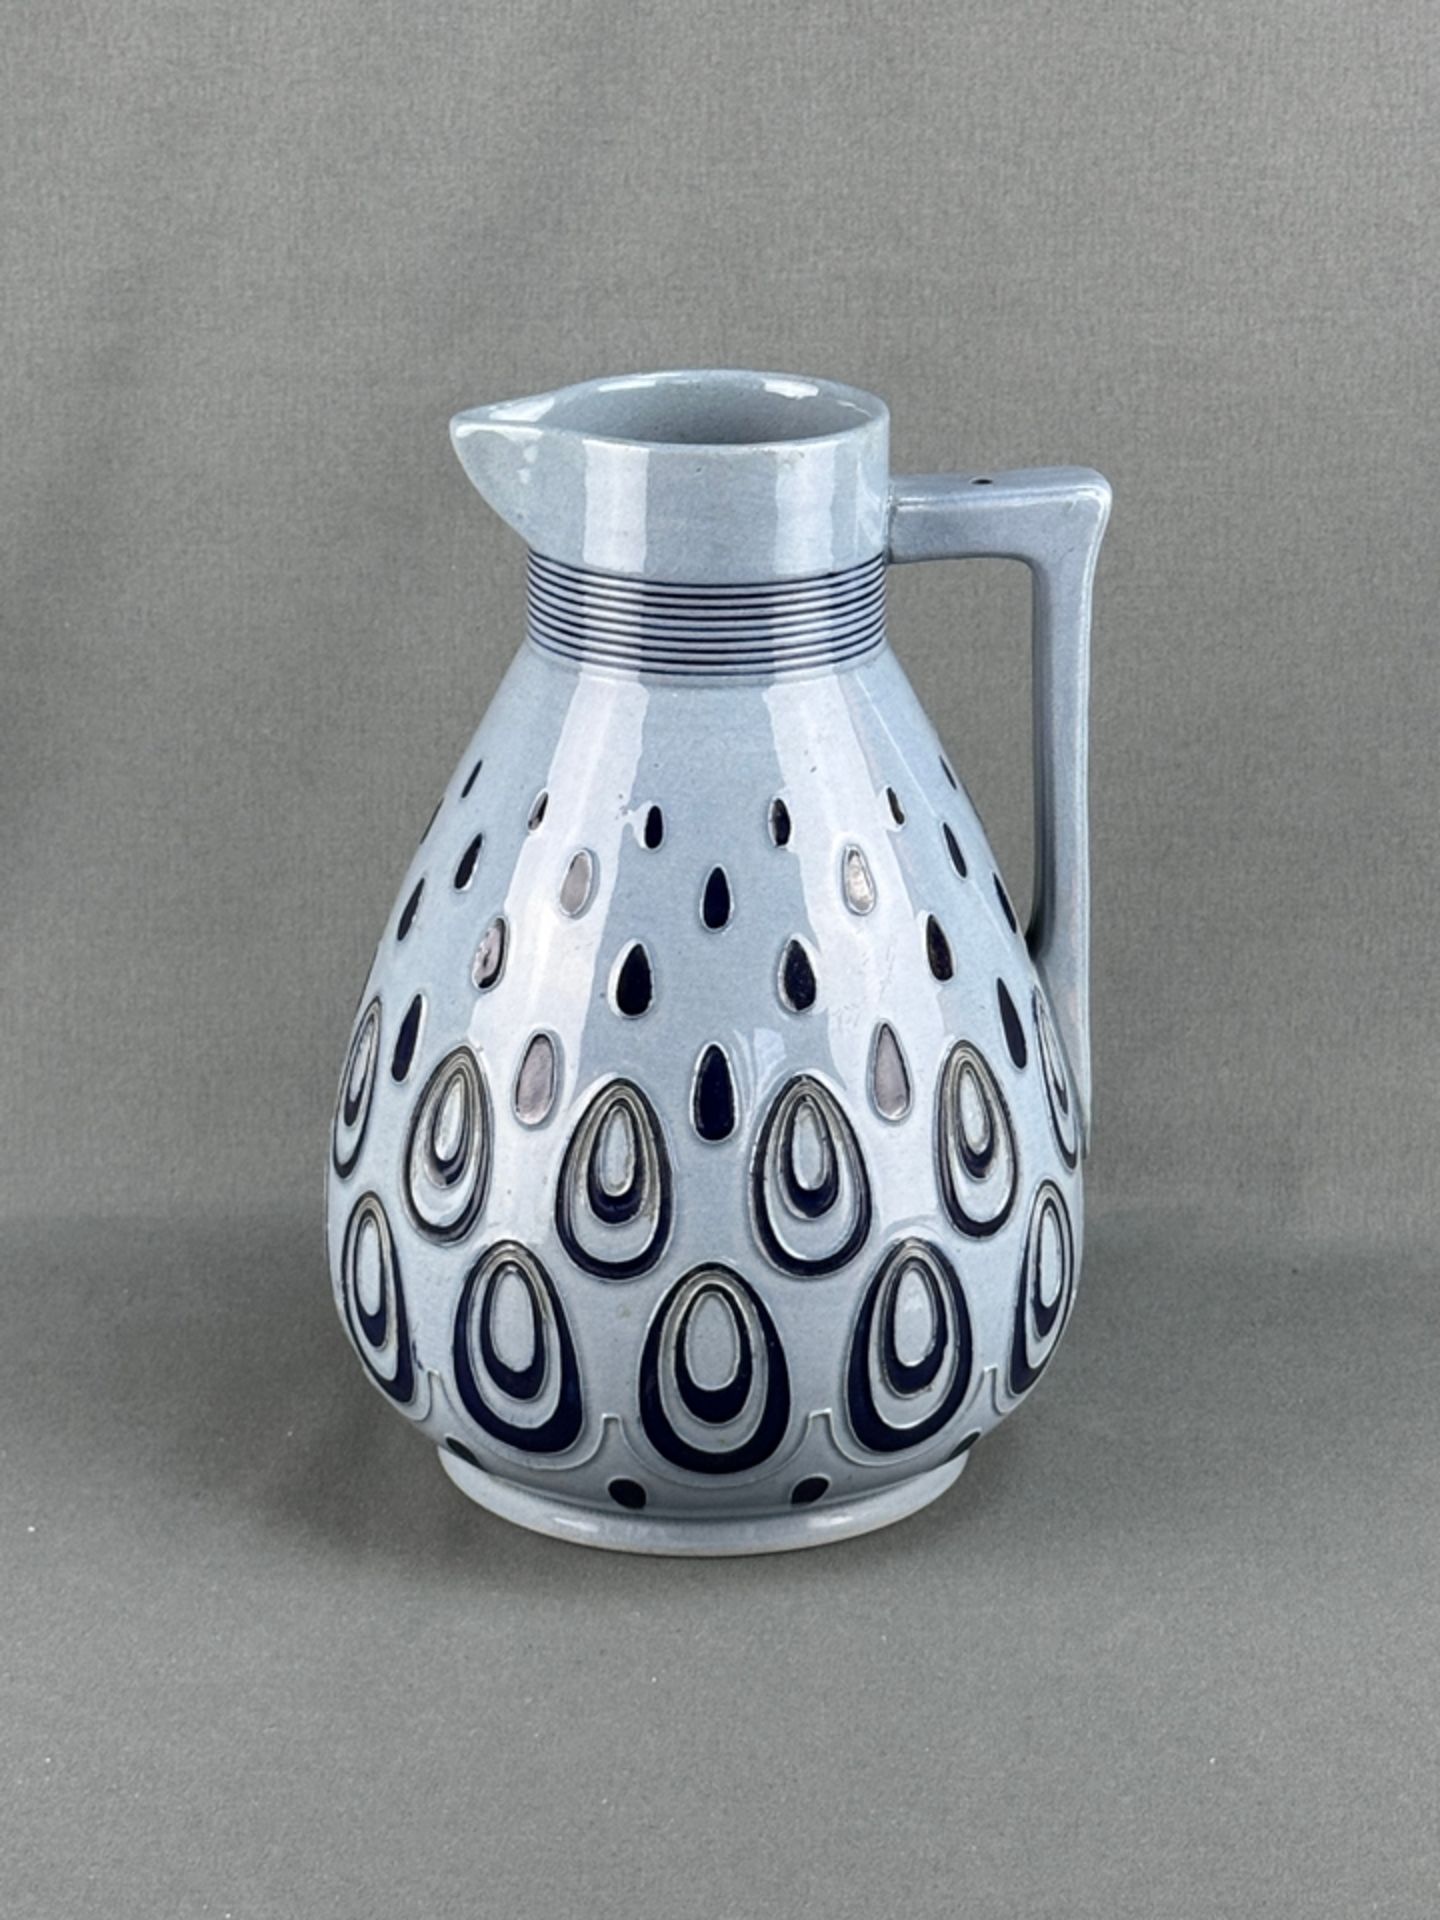 Art Decó jug, stoneware, Germany, Wick-Werke, grey-blue glazed, all-round reliefed, high oval, blue